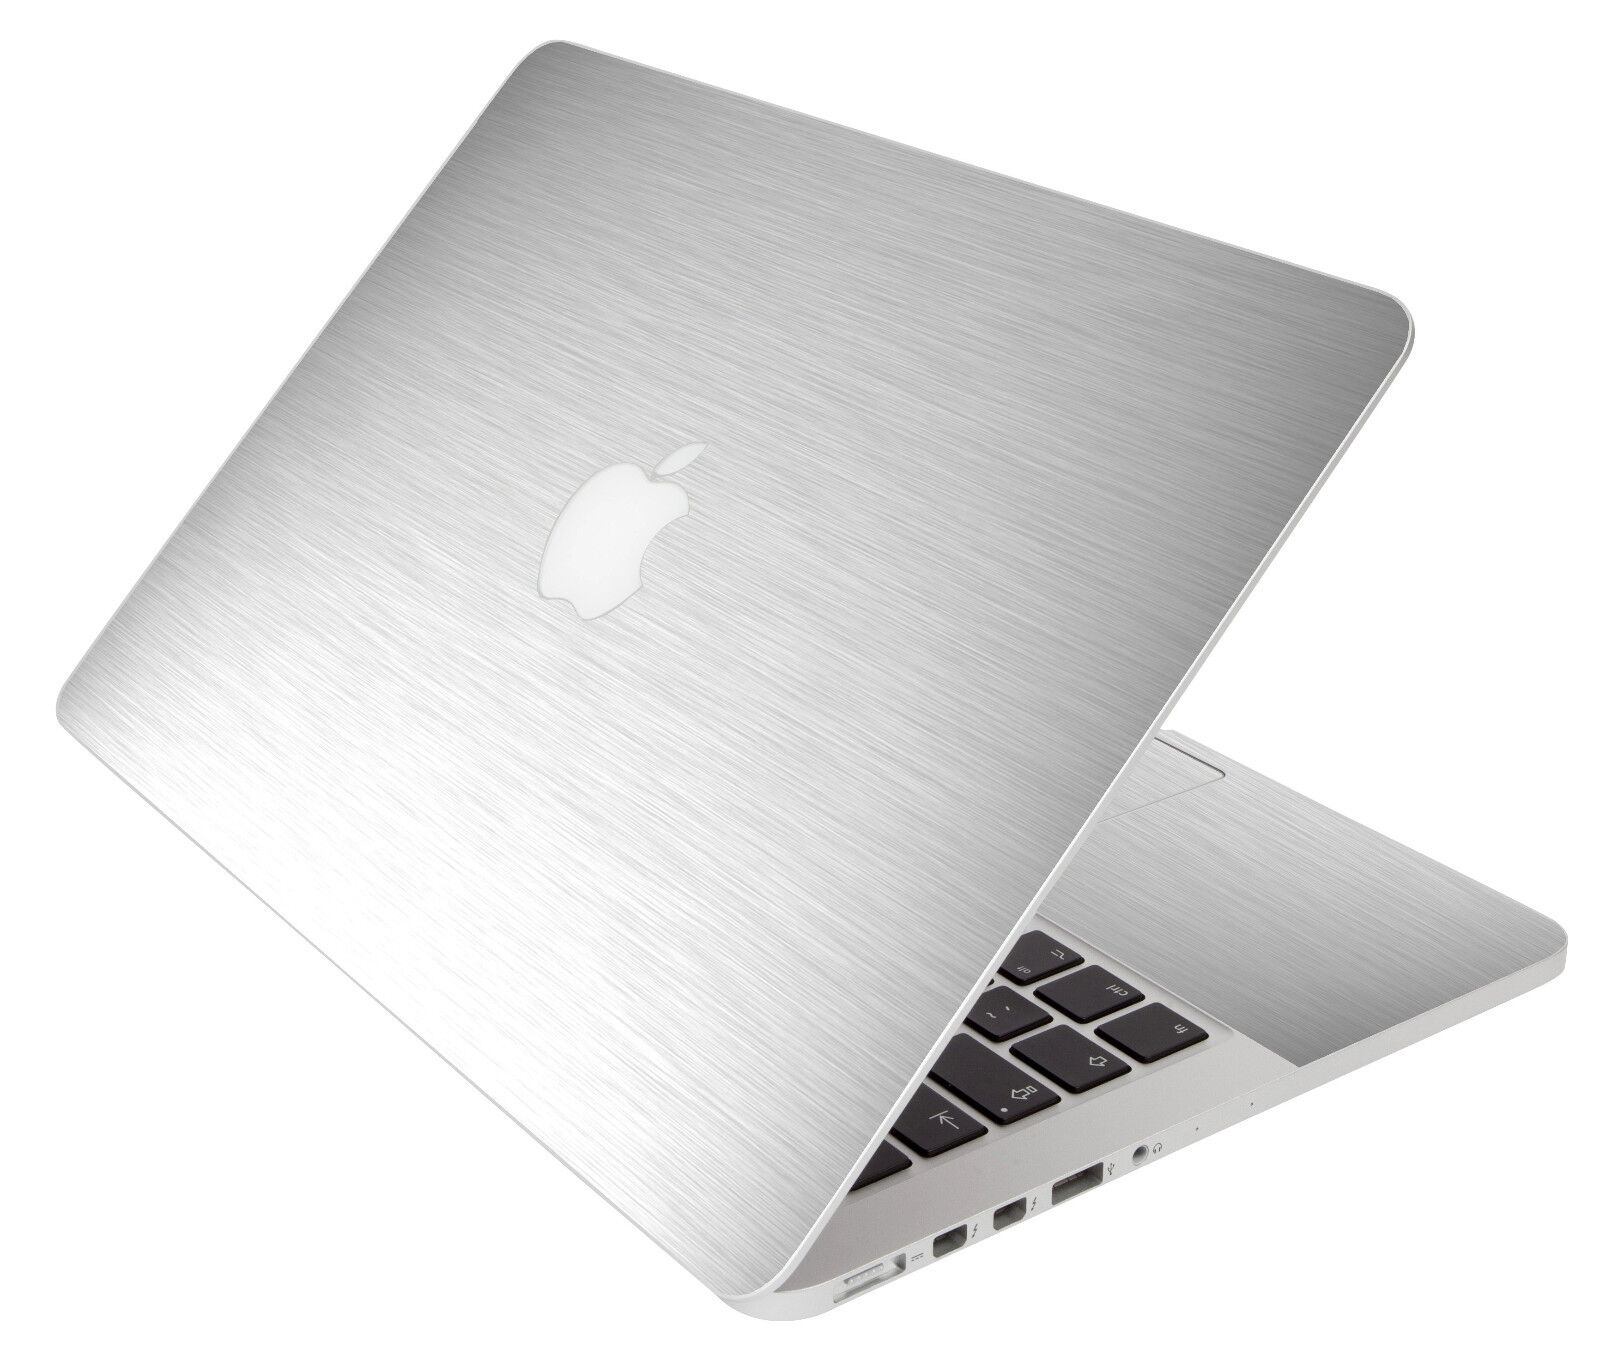 LidStyles Metallic Laptop Skin Protector Decal MacBook Pro 13 A1278